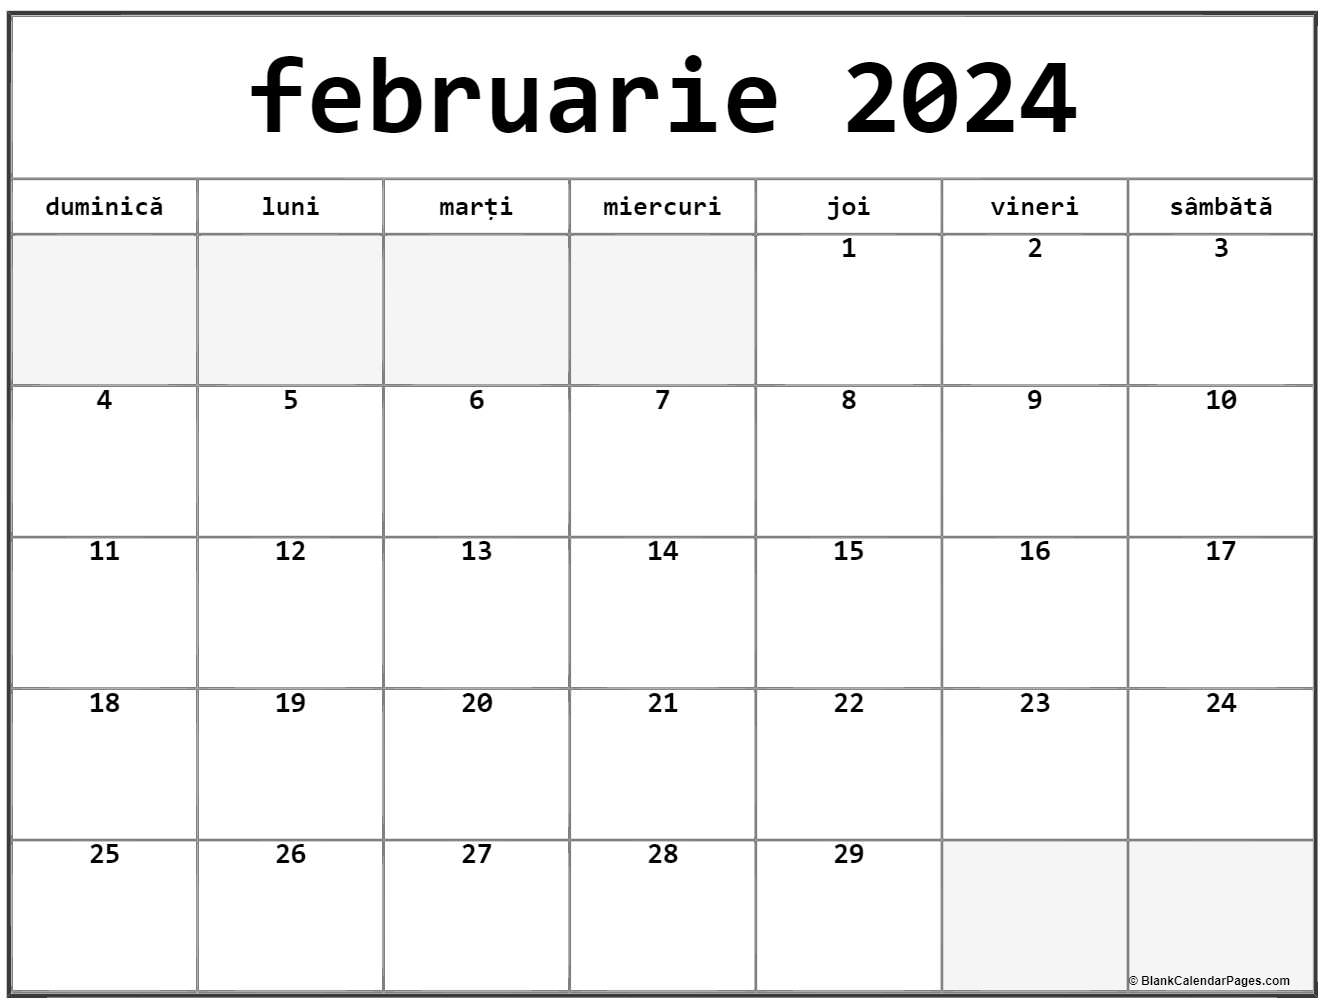 Calendarul februarie 2024 imprimabil gratuit in romana